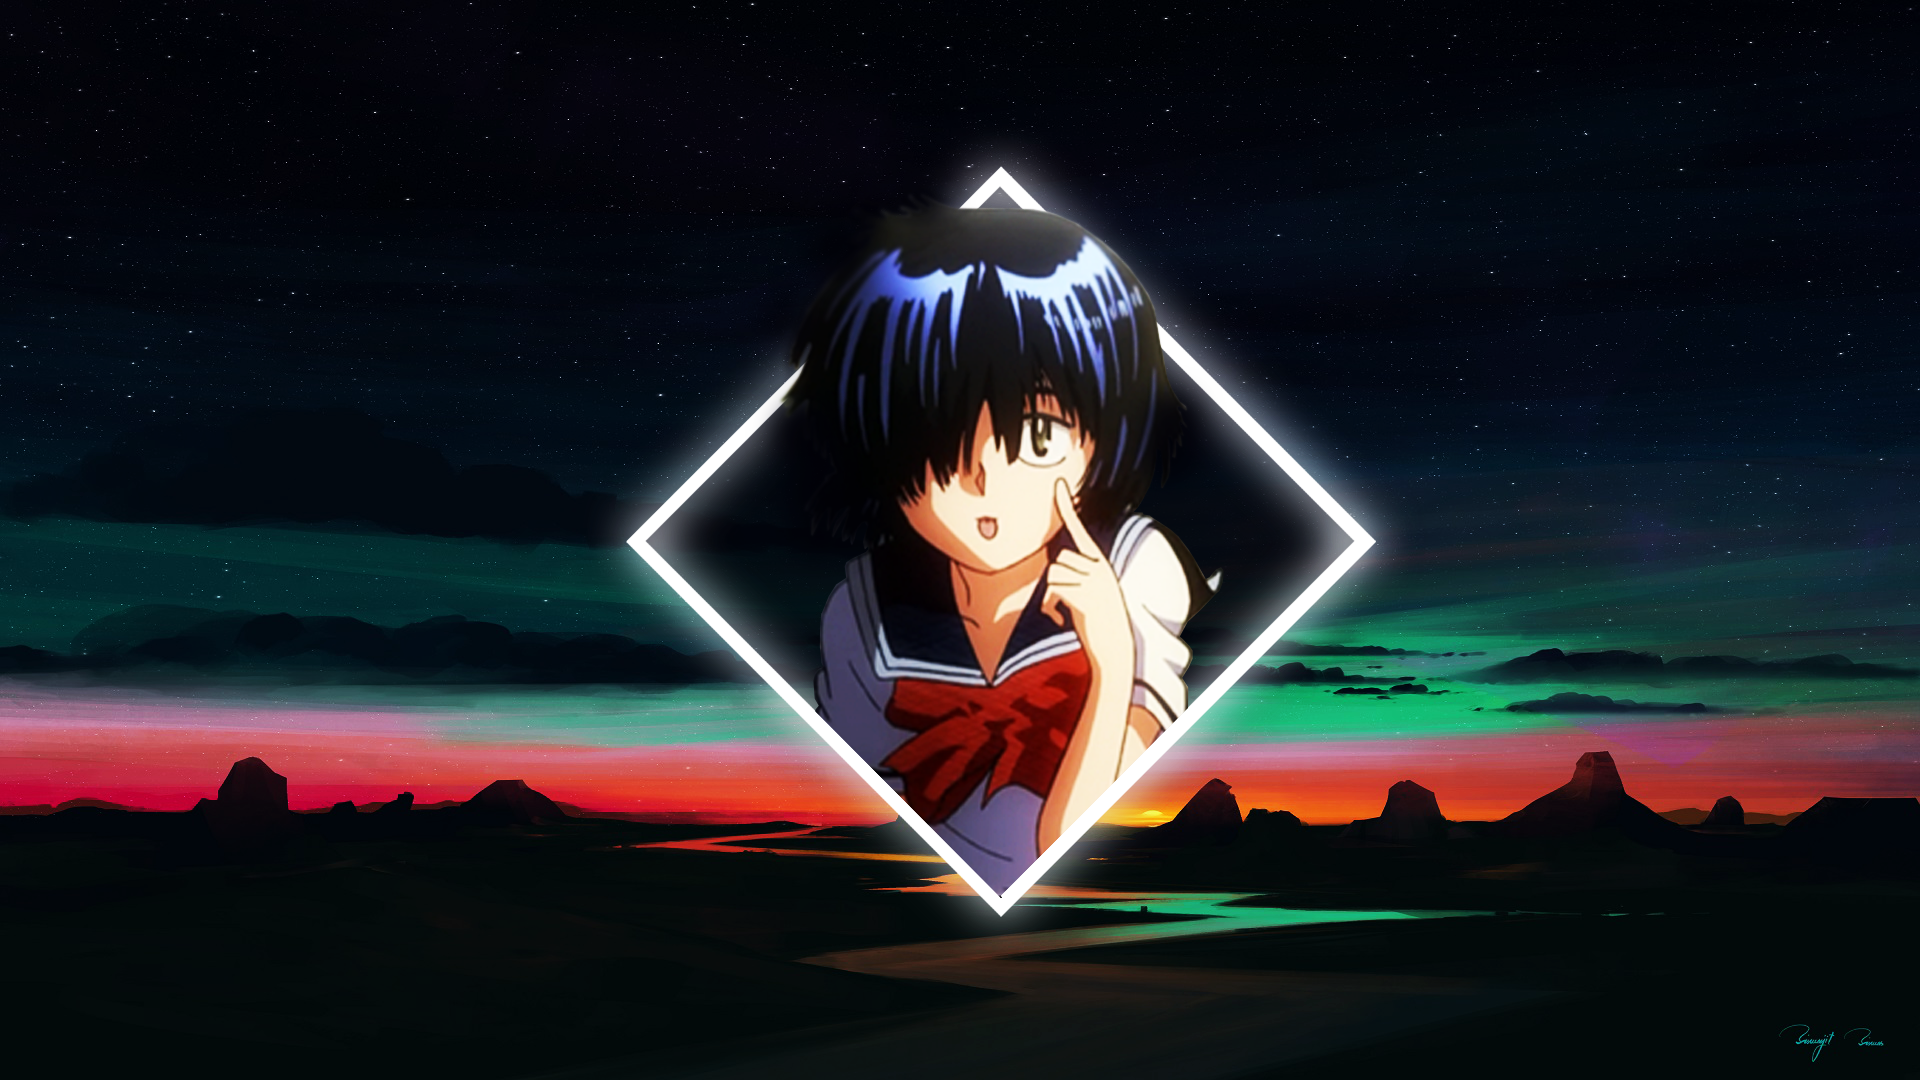 Anime 1920x1080 Urabe Mikoto landscape digital art dark night desert Mysterious Girlfriend X picture-in-picture